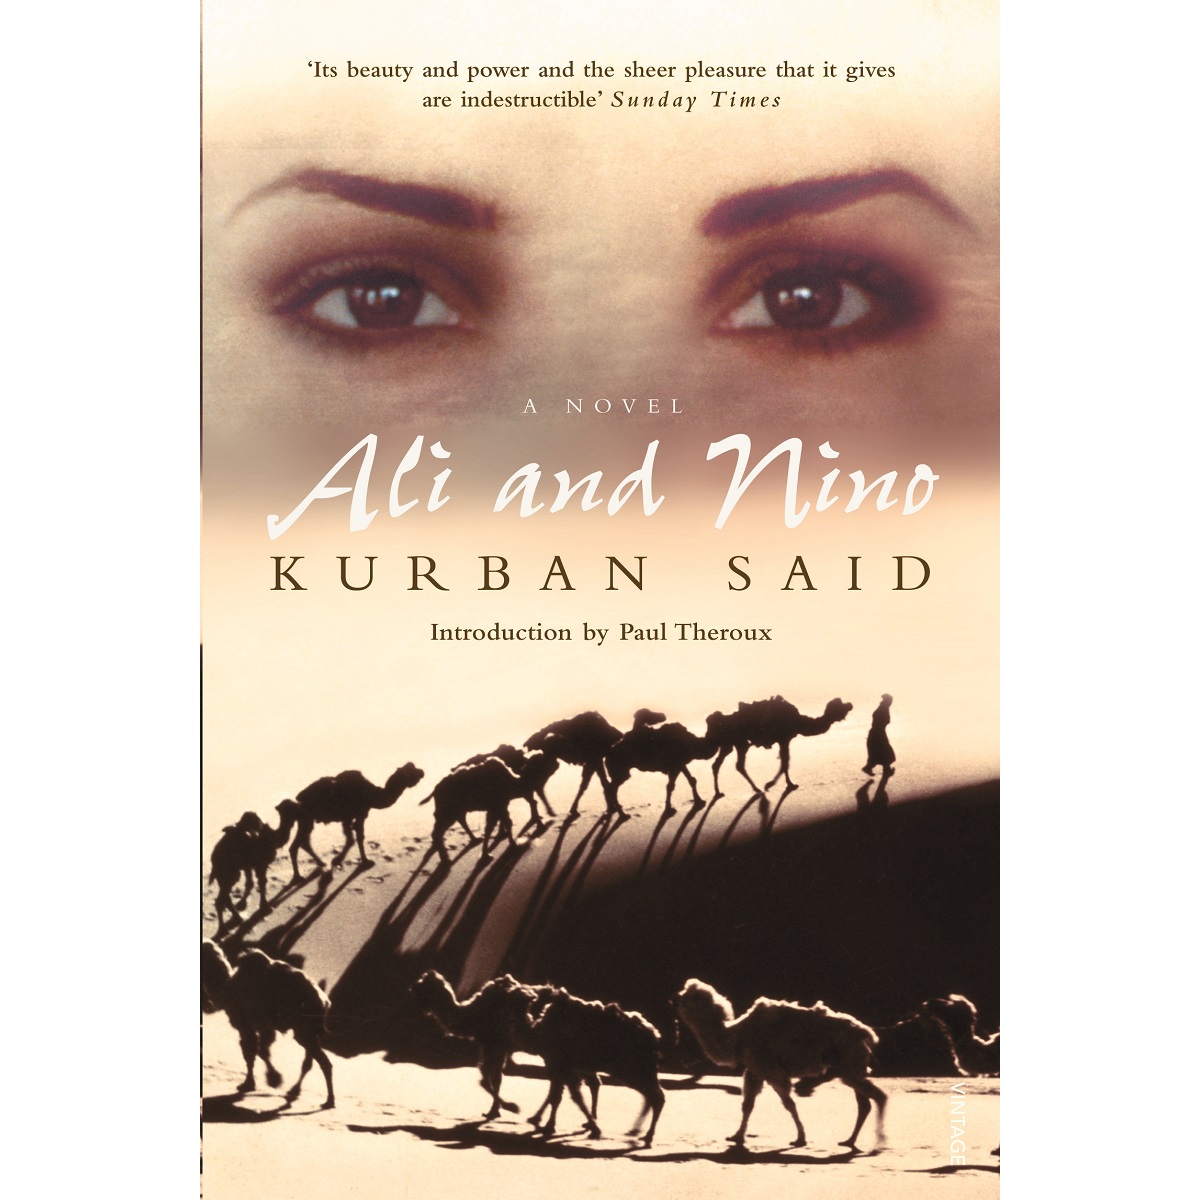 Ali and Nino By Kurban Said